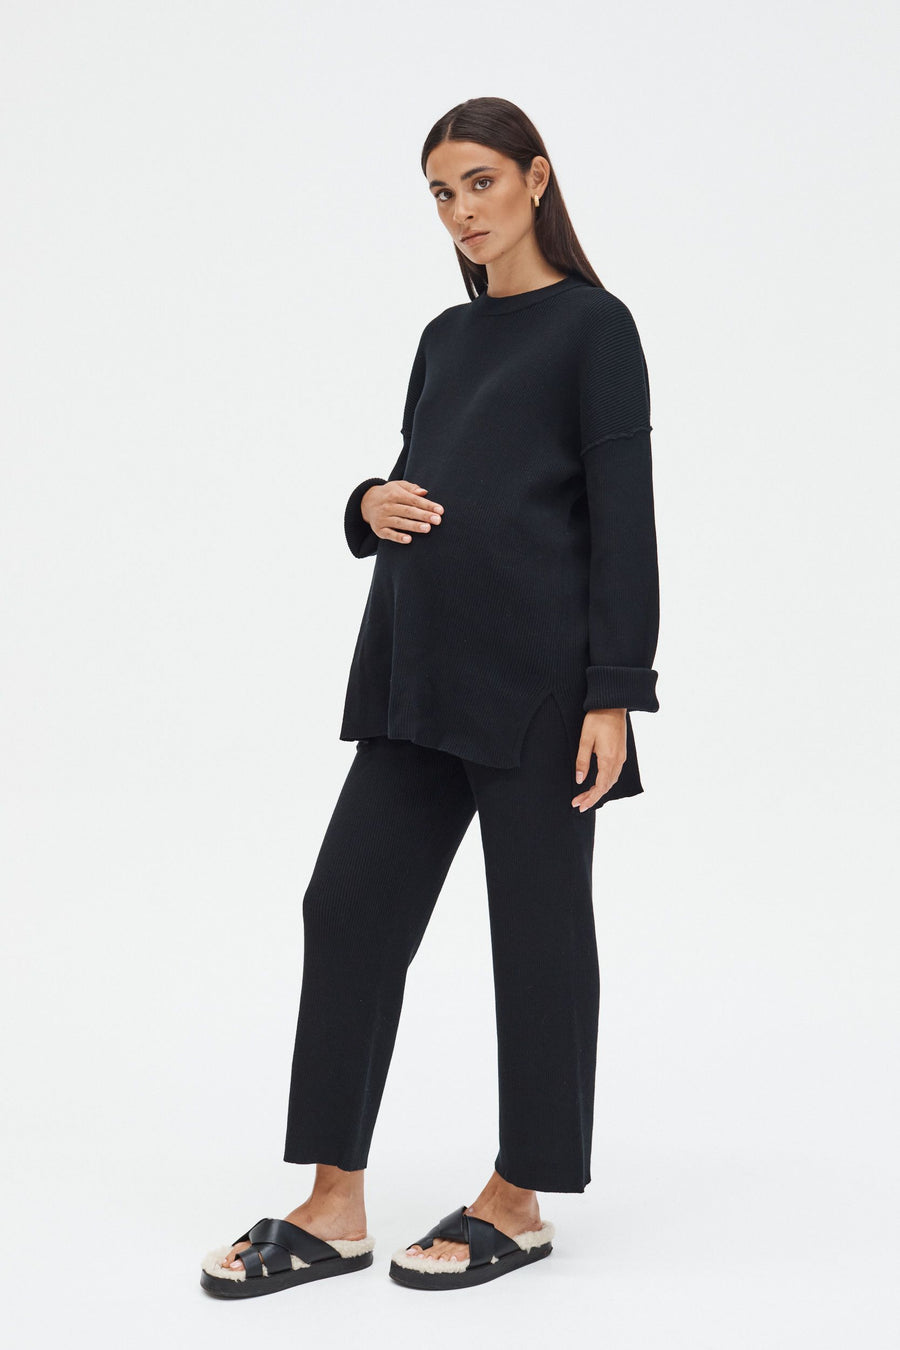 Designer Maternity Jumper (Black) 5